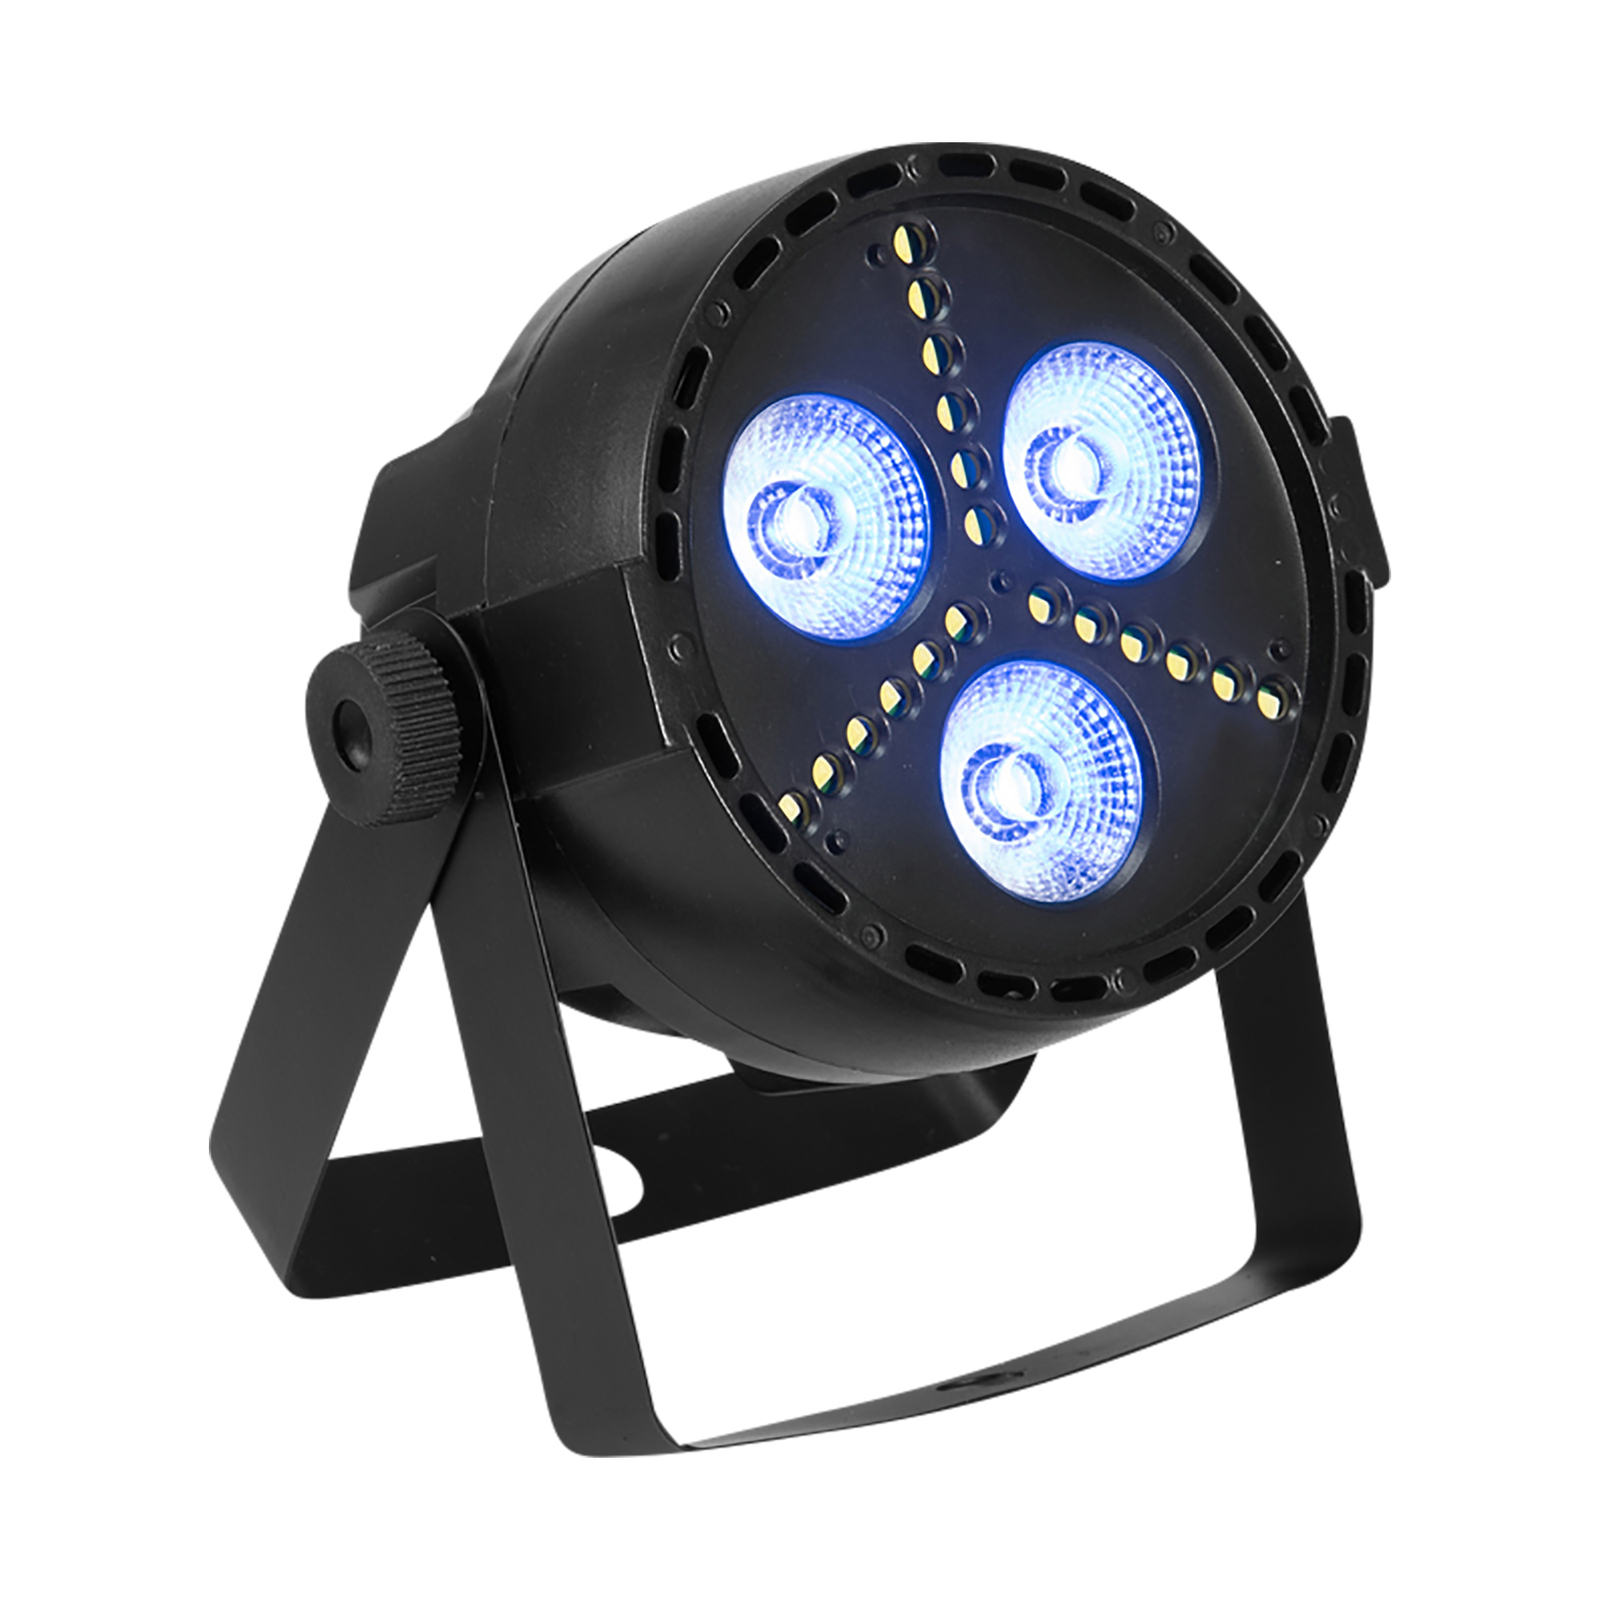 EUROLITE LED PARty Hybrid spot RGB stroboscope